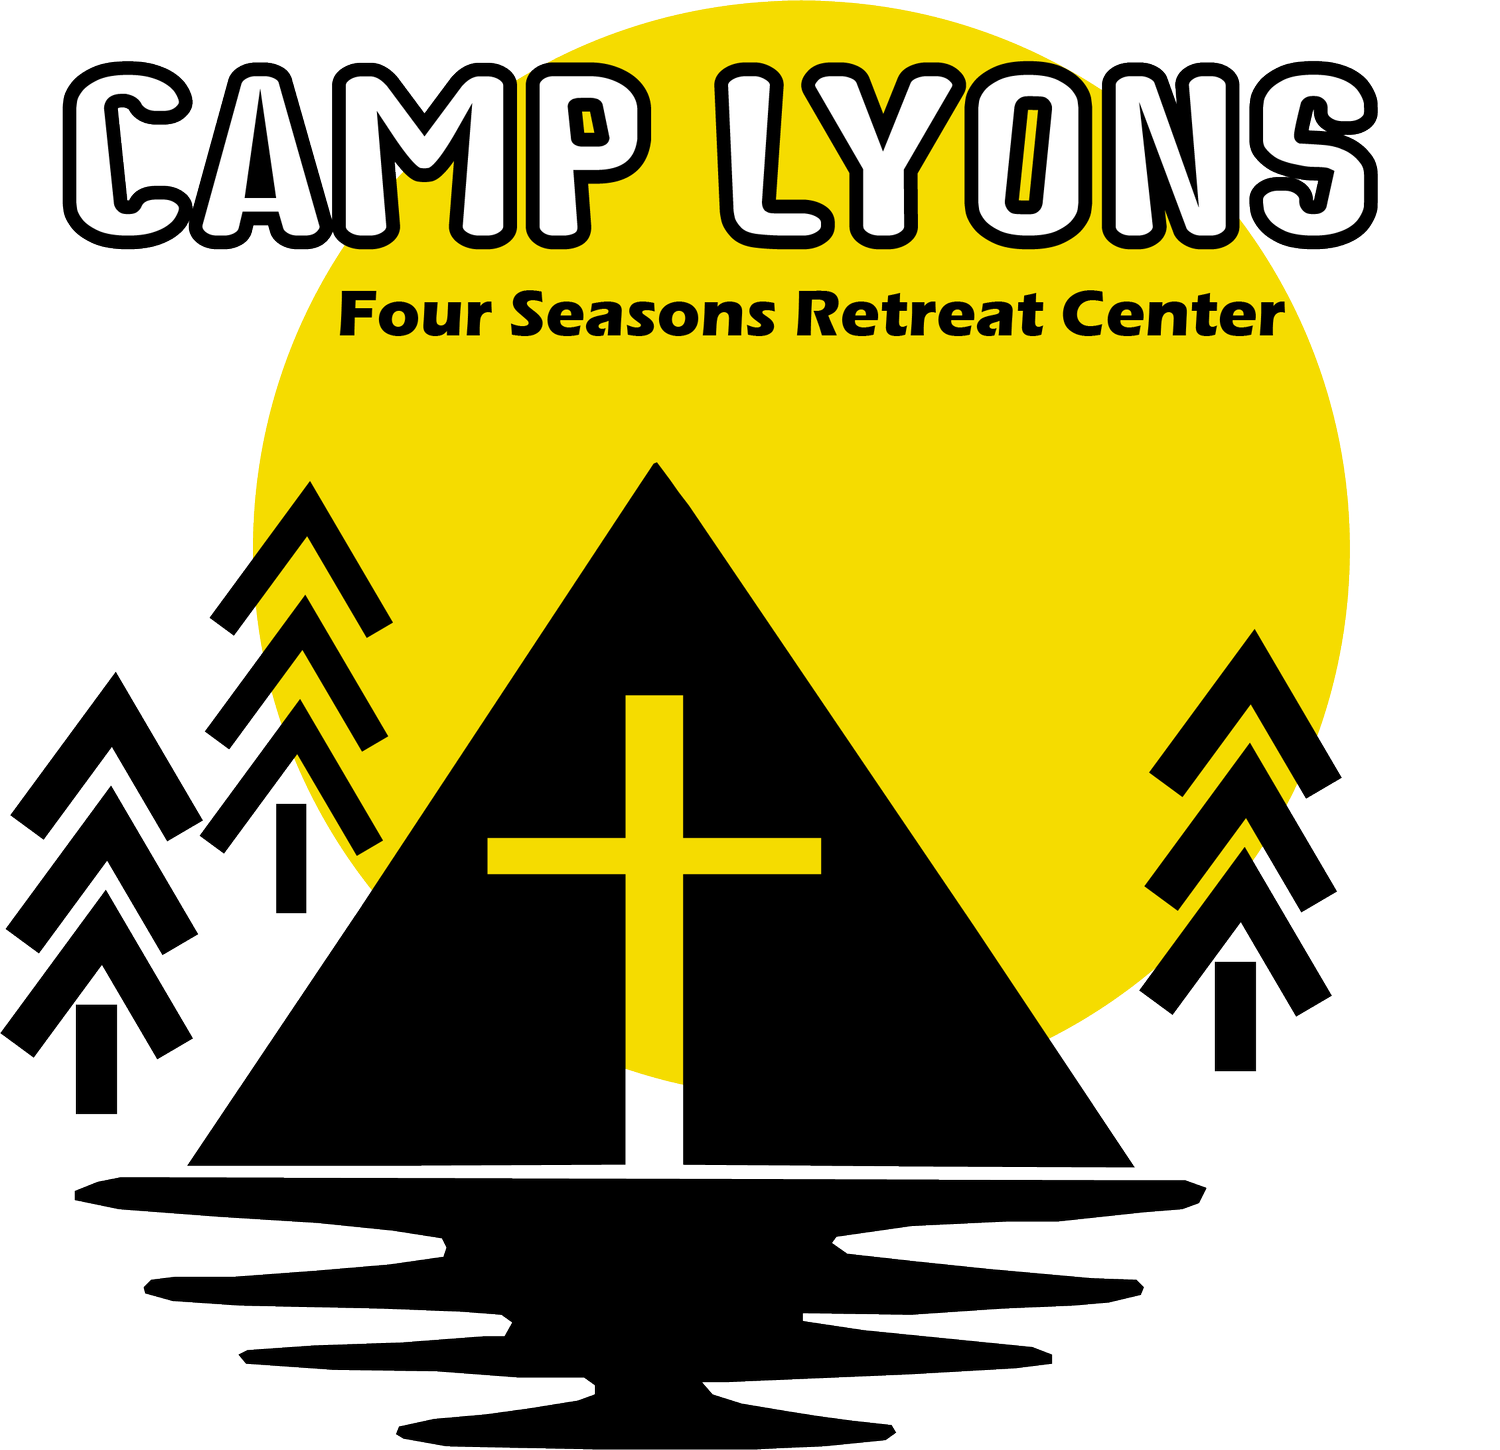 Camp Lyons